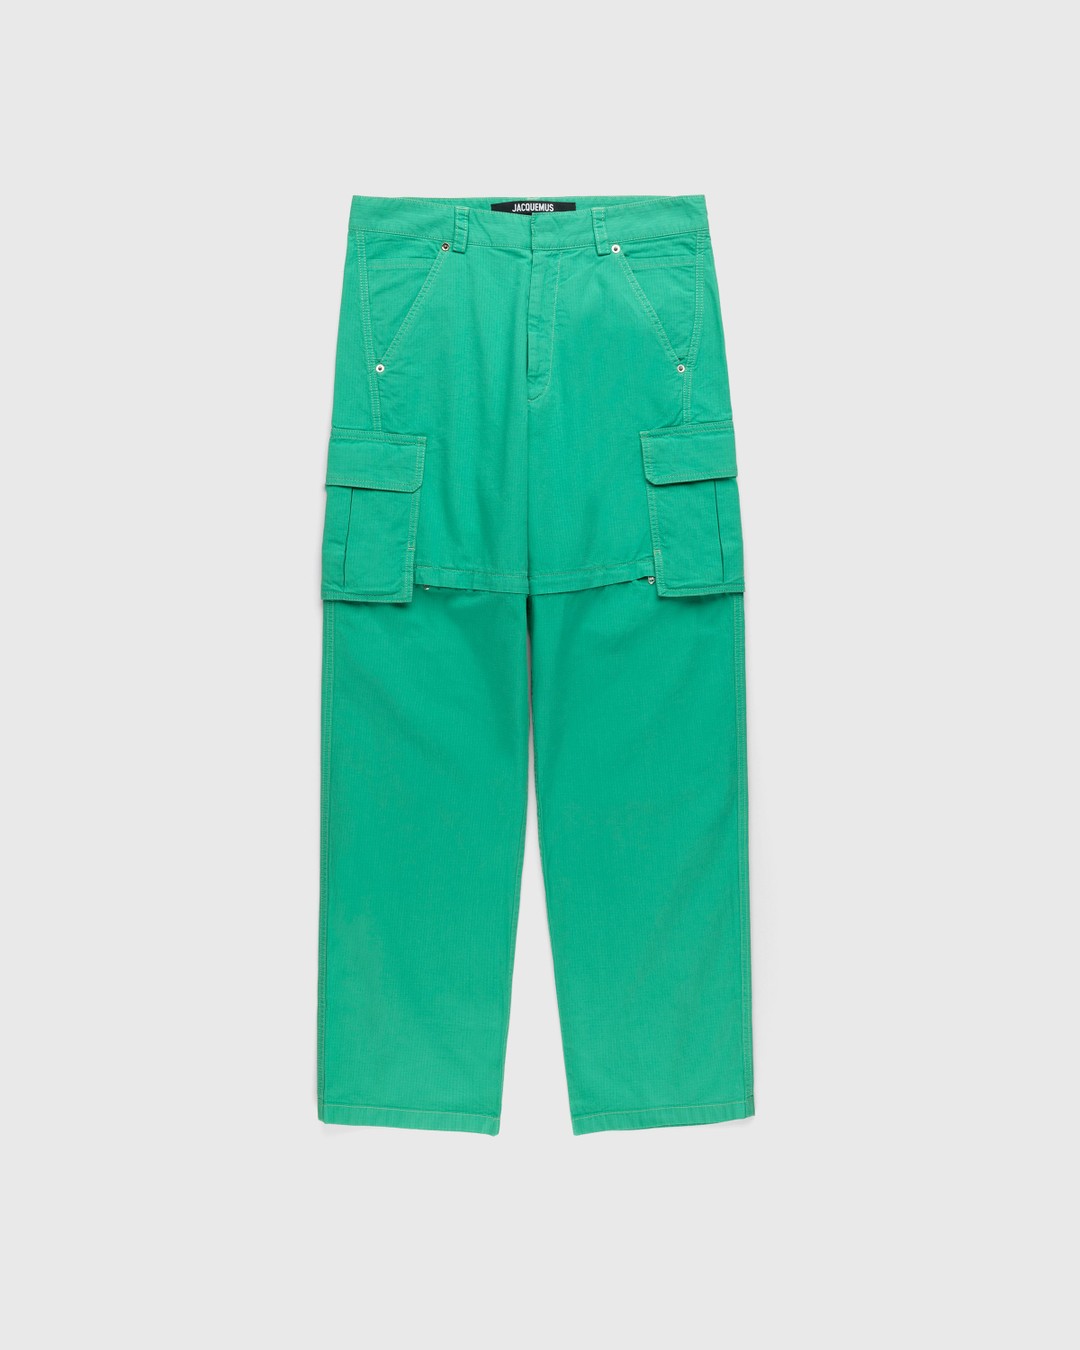 JACQUEMUS – Le Pantalon Peche Green - Pants - Green - Image 1